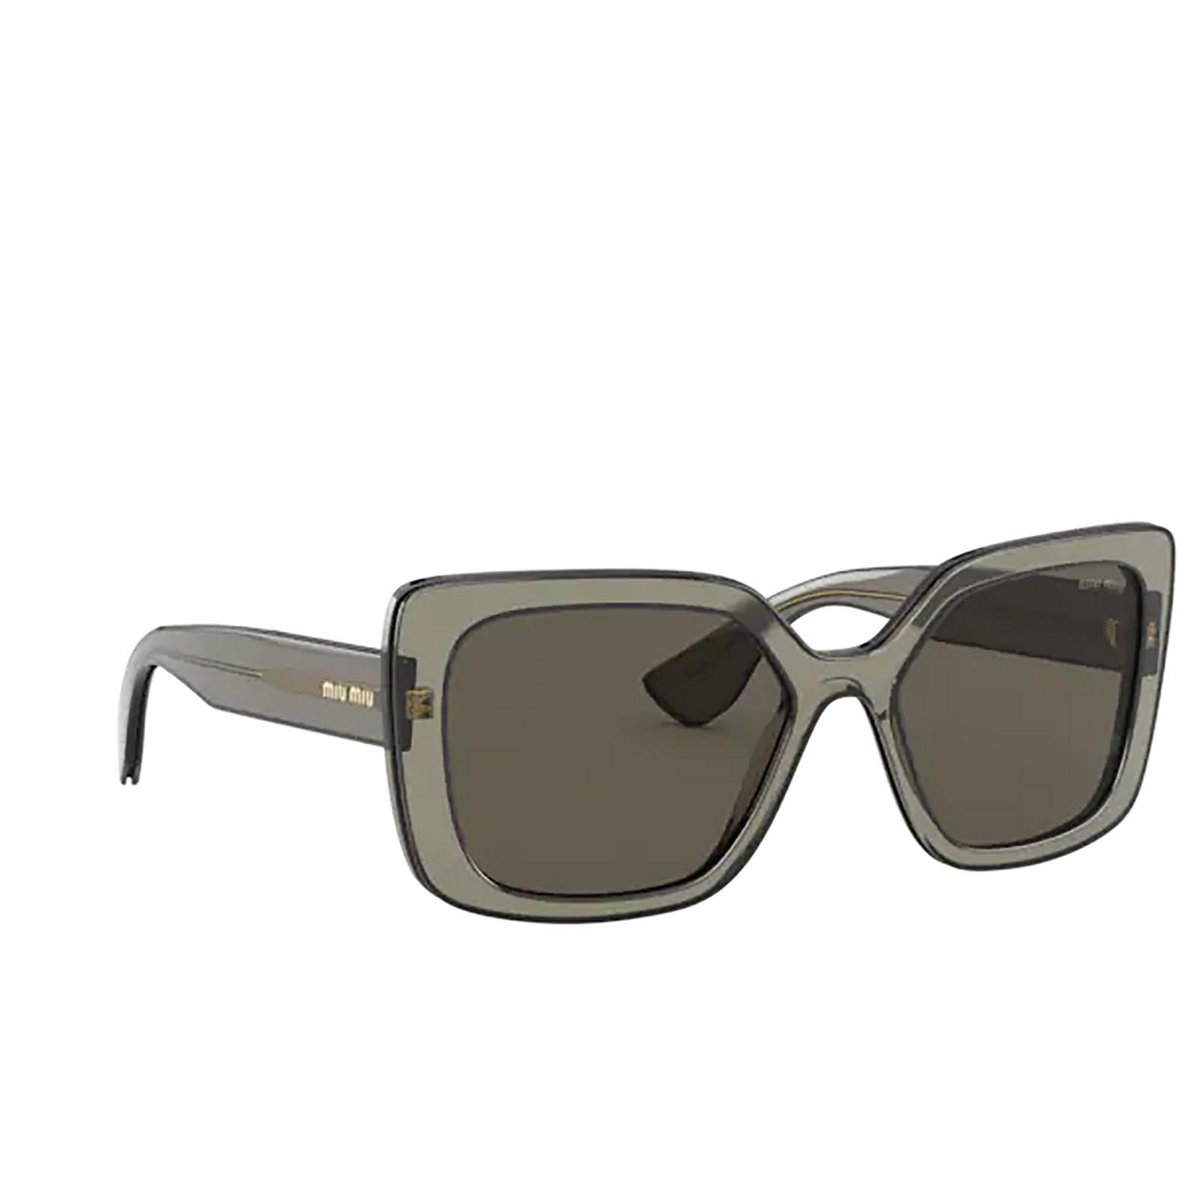 Miu Miu® Square Sunglasses: MU 09VS color Black Transparent 08H5S2 - three-quarters view.